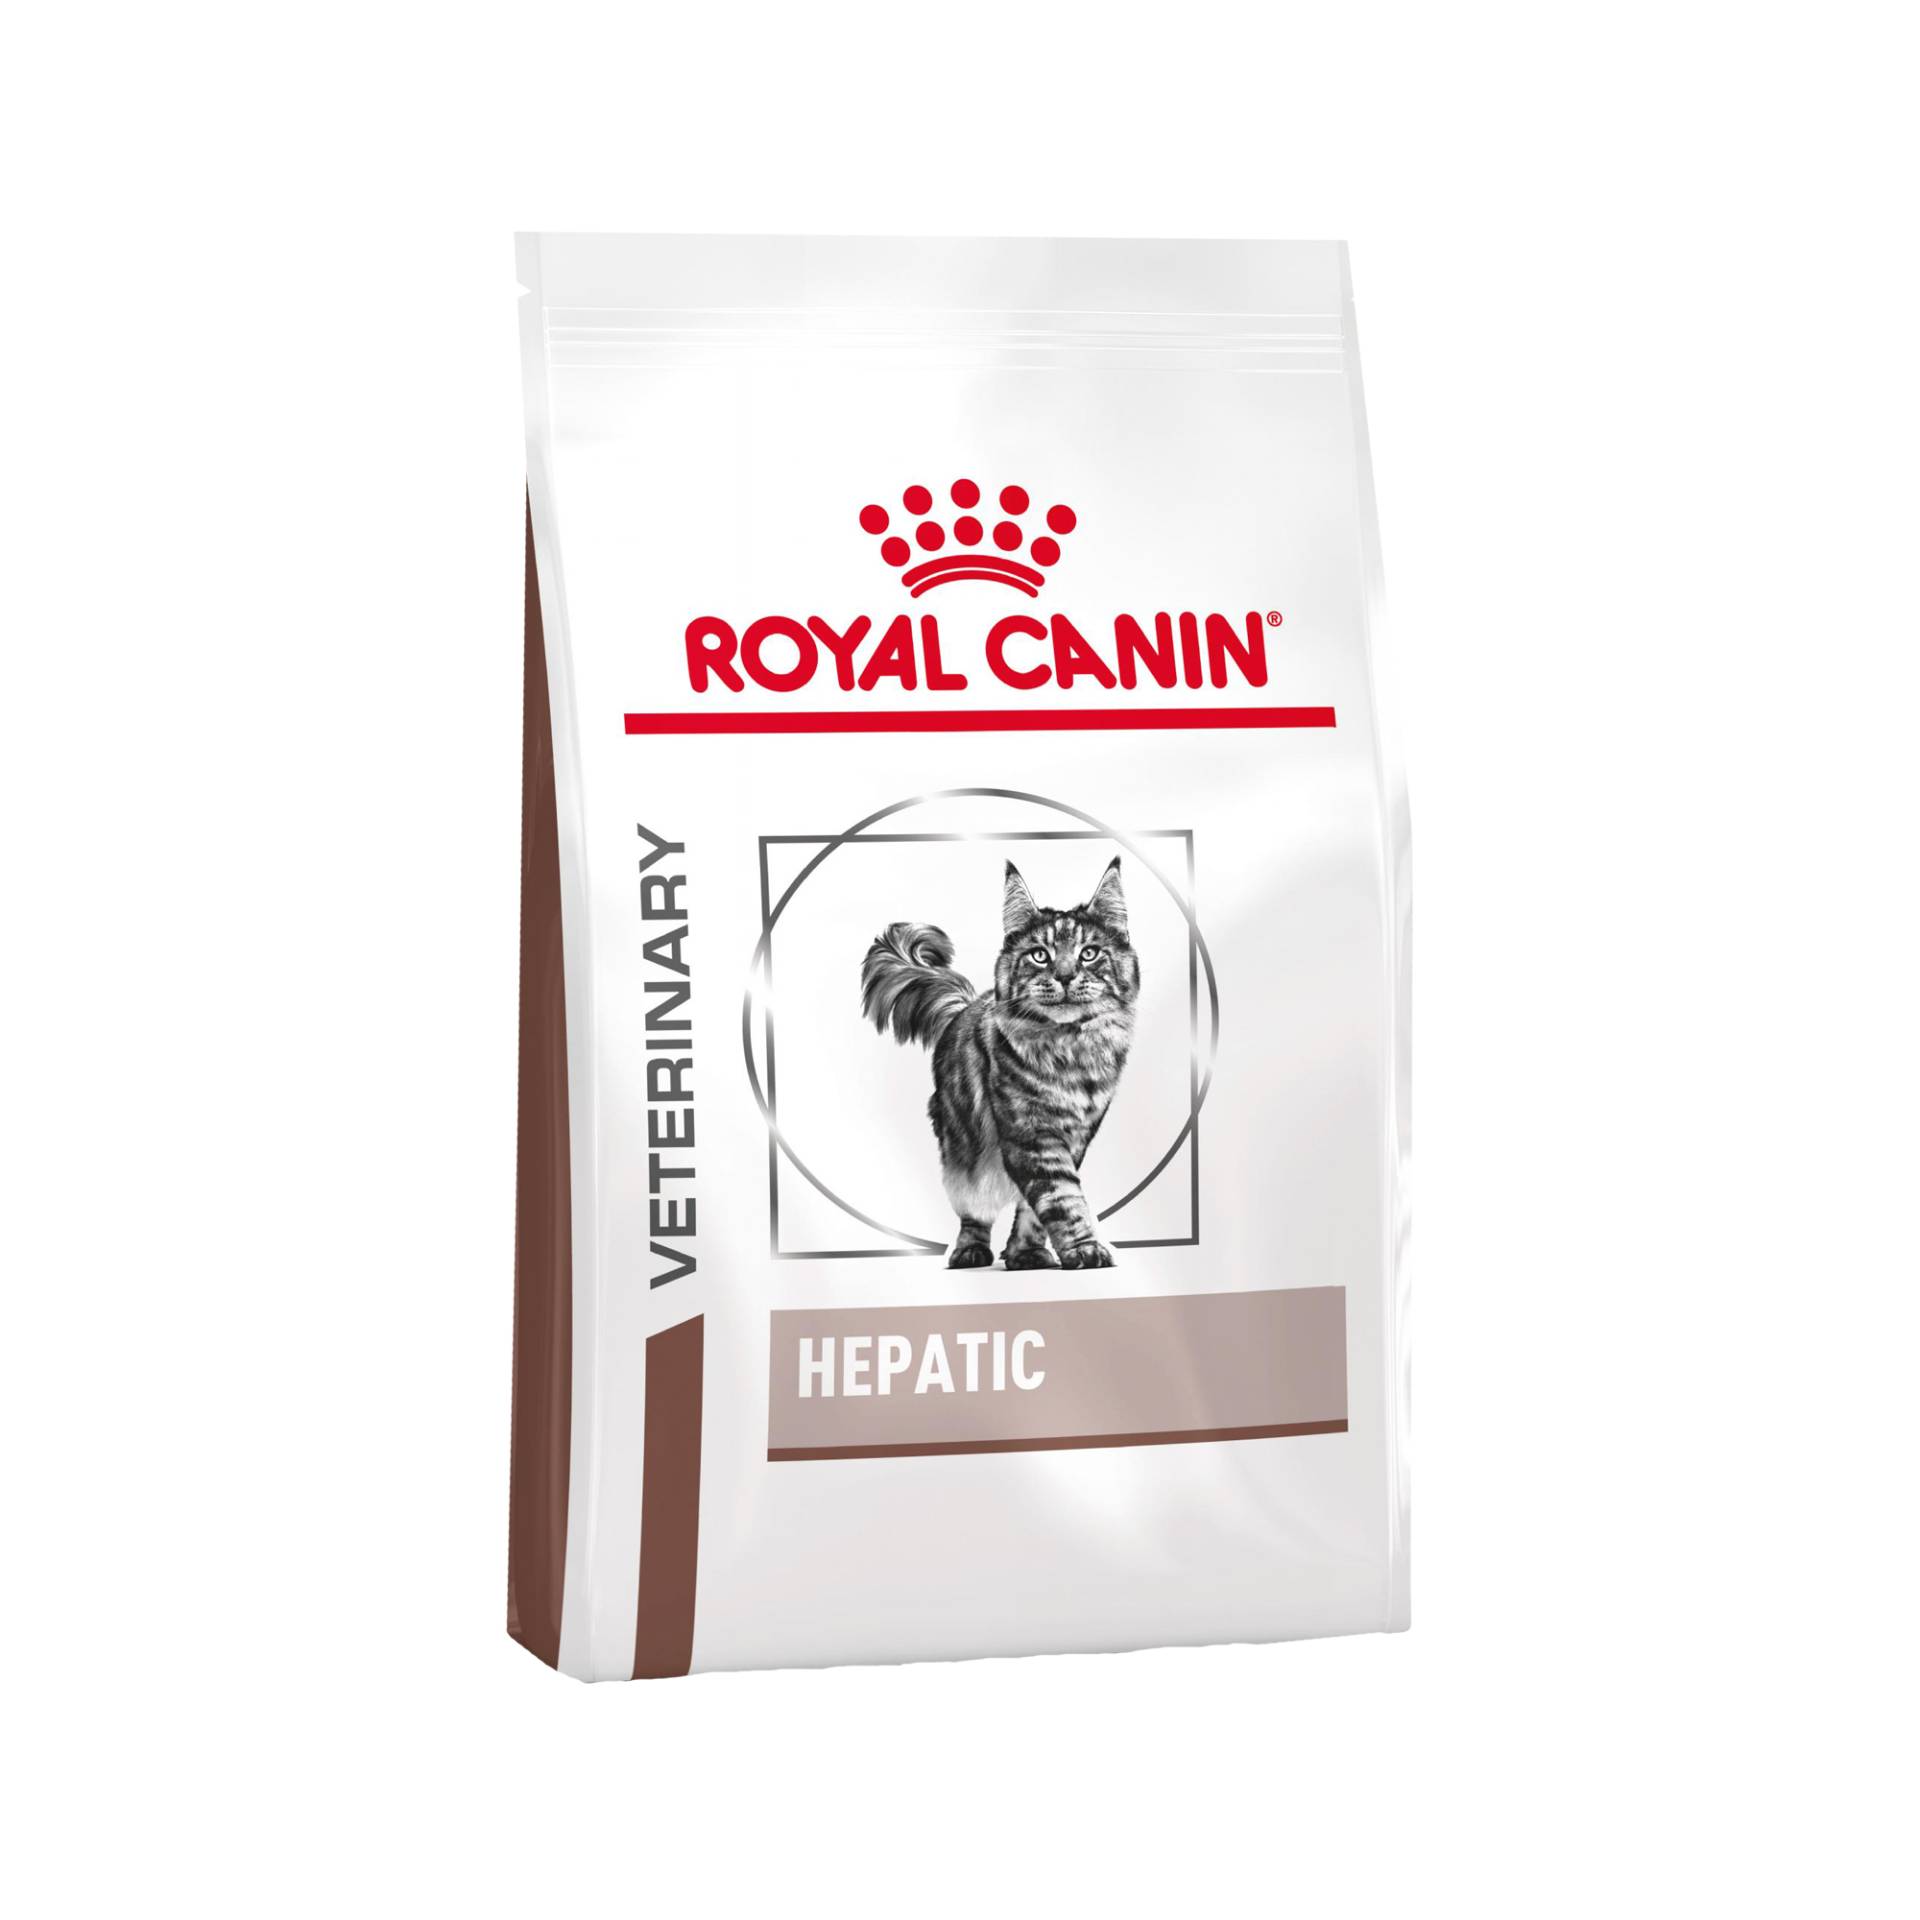 Royal Canin Hepatic (HF 26) Katzenfutter - 4 kg von Royal Canin